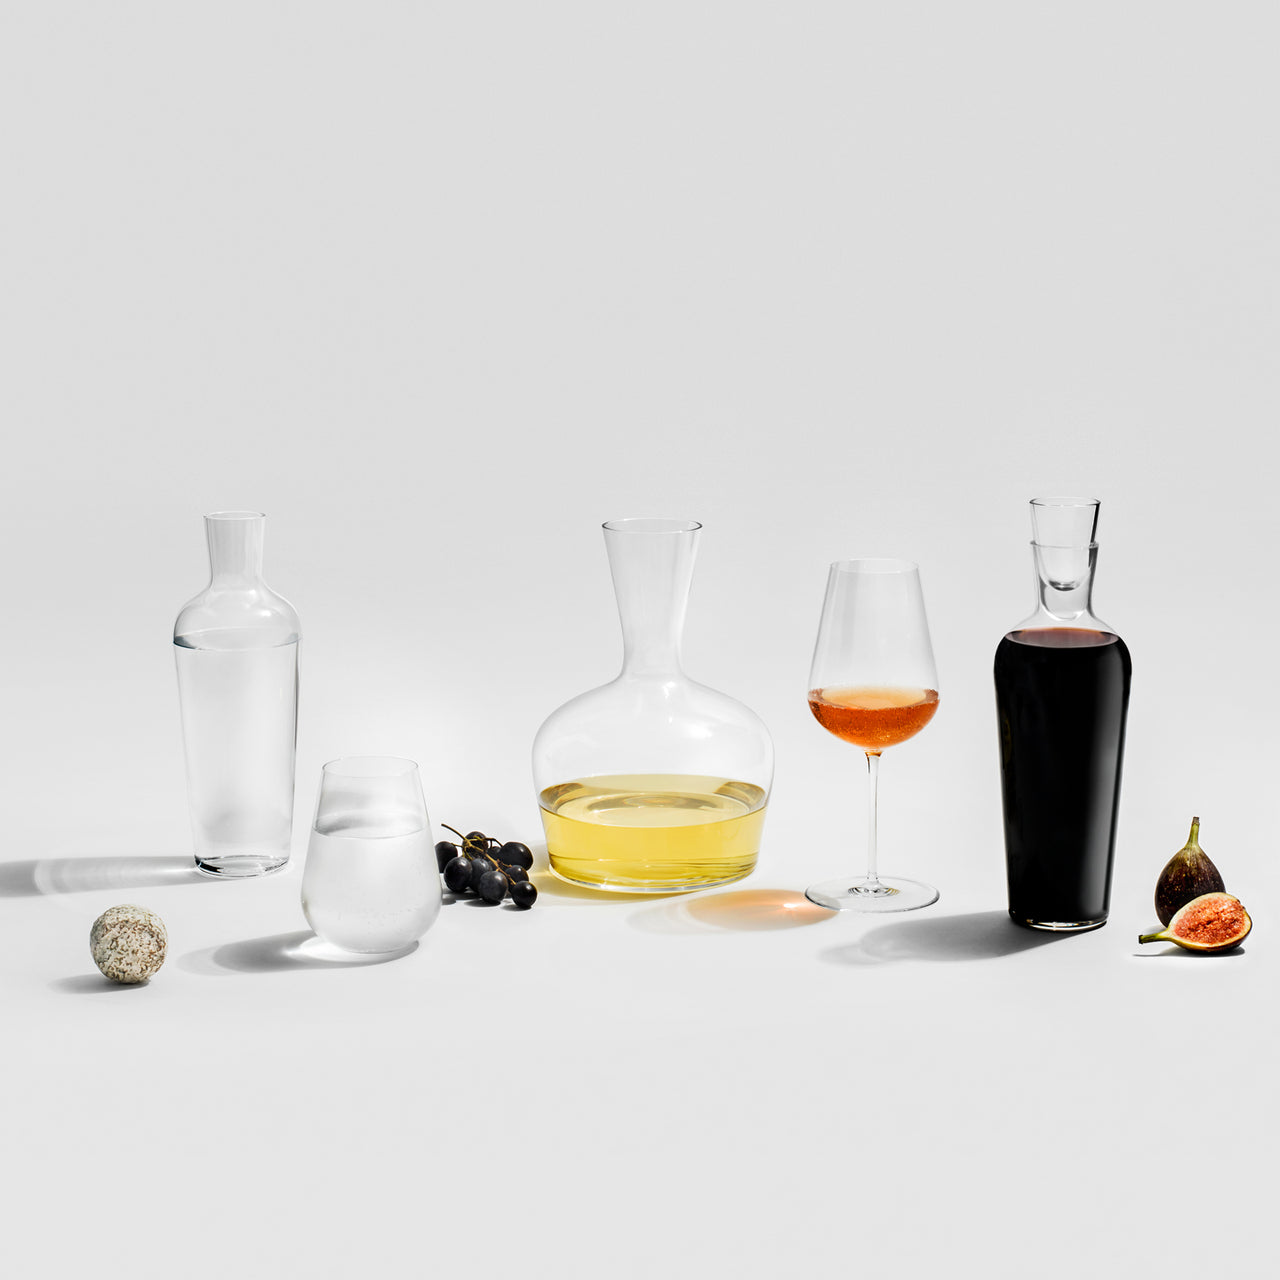 Richard Brendon + Jancis Robinson Wine Glass / Set of 2